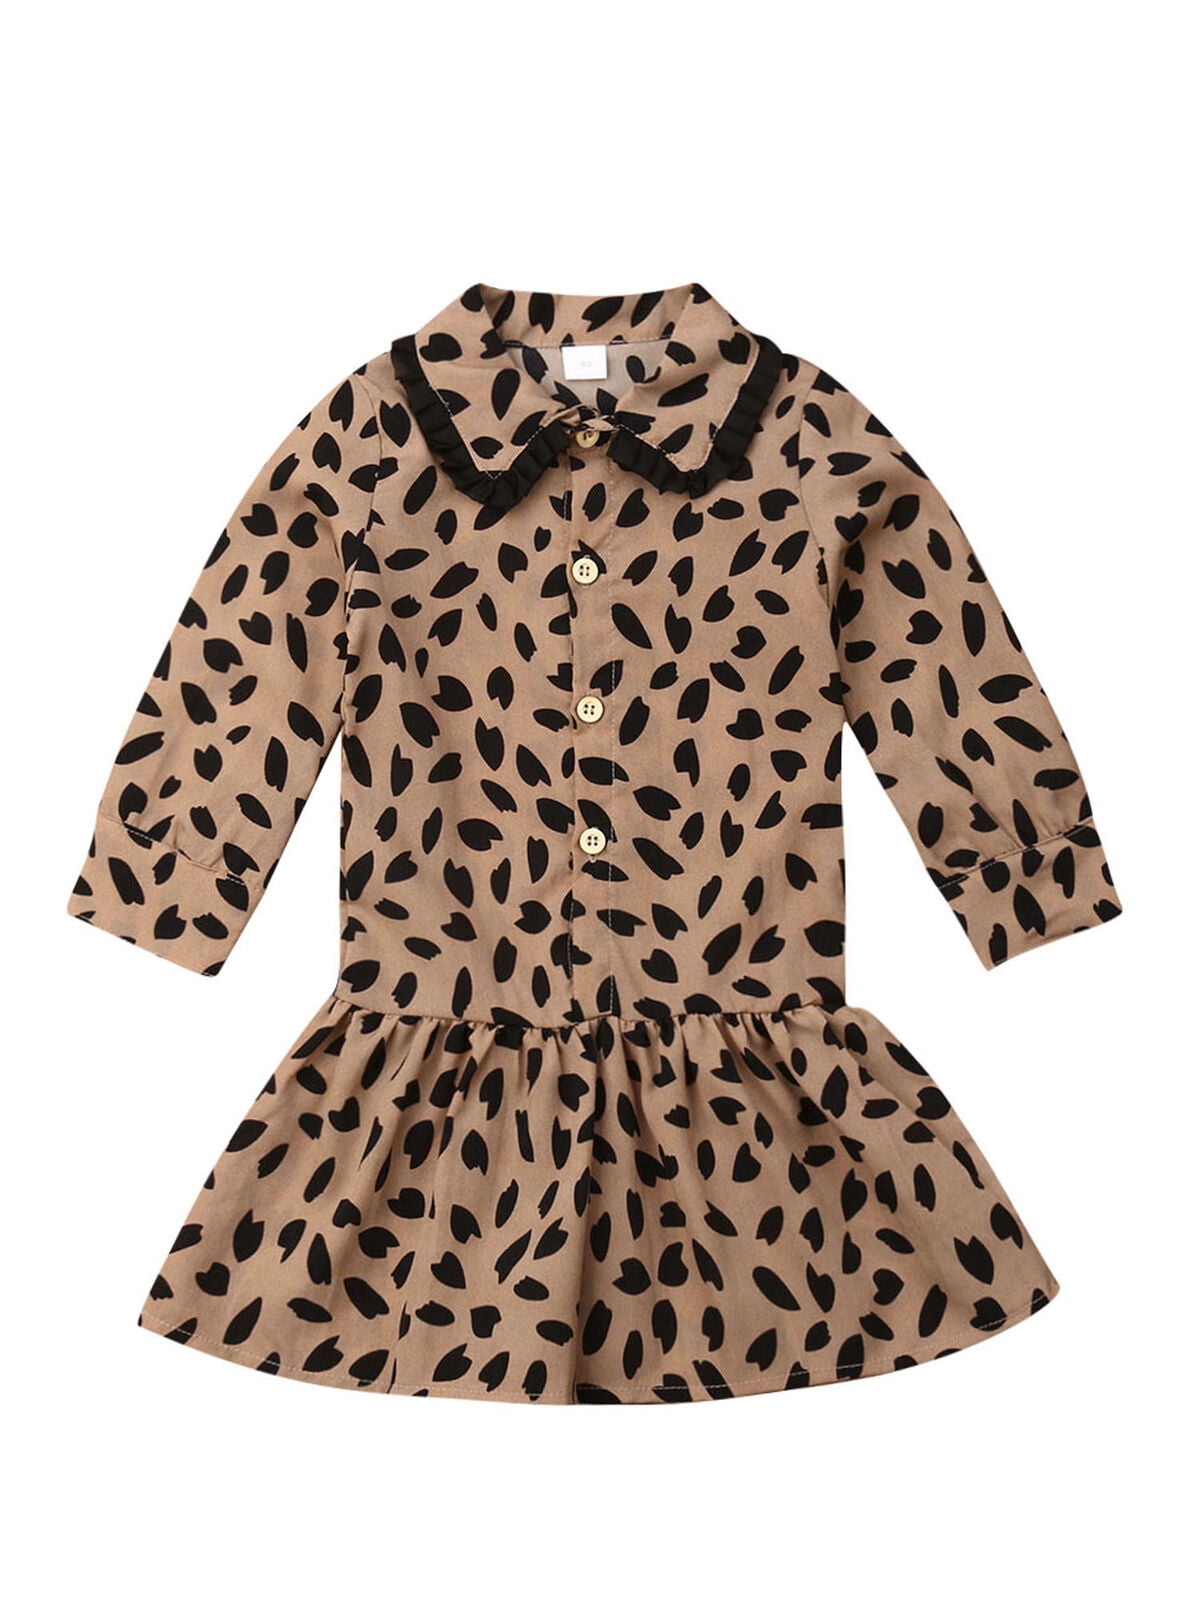 Kfnire Little Girls Short/Long Sleeve Casual Animal Print Dress